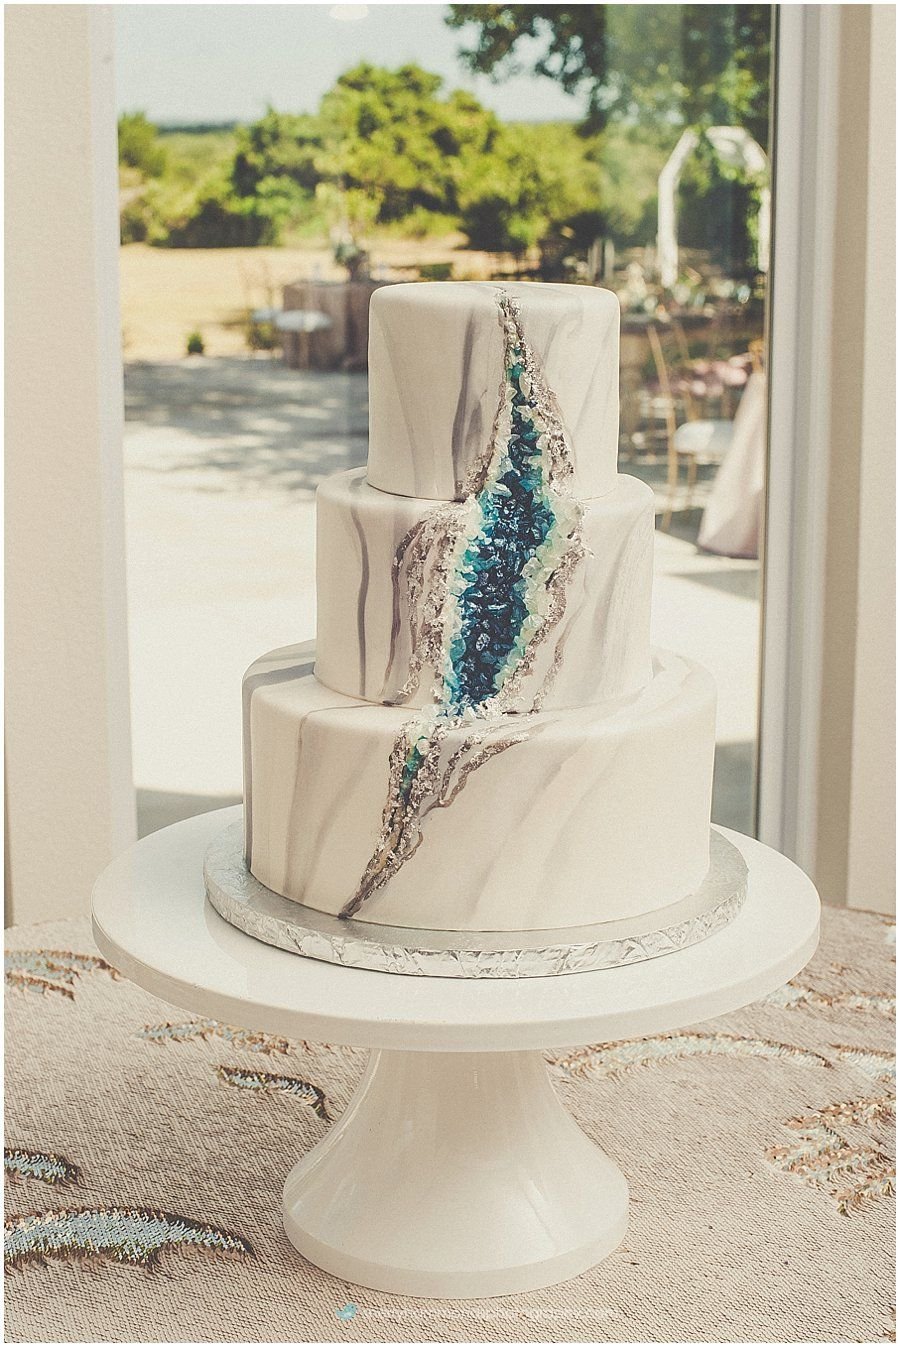 Торт мраморный с кристаллами